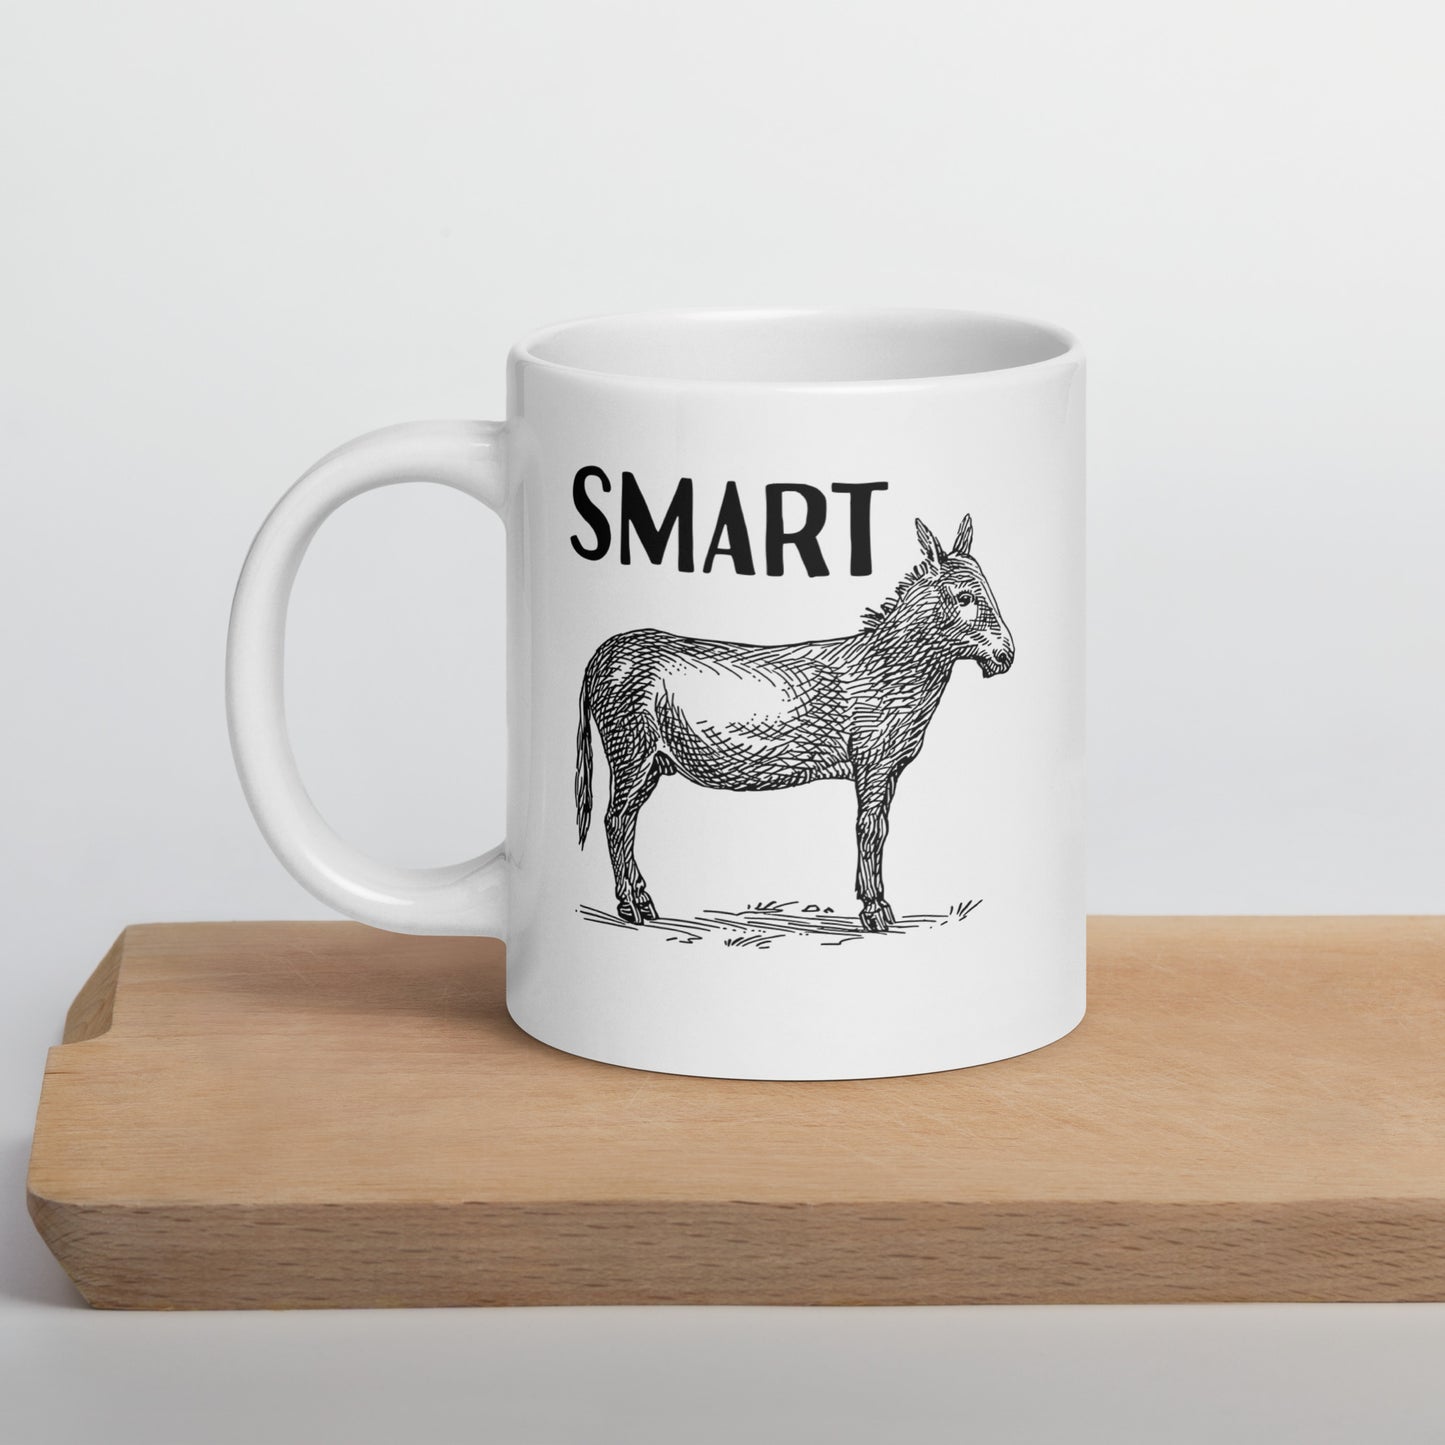 The Smart Ass Statement White Ceramic Coffee Mug